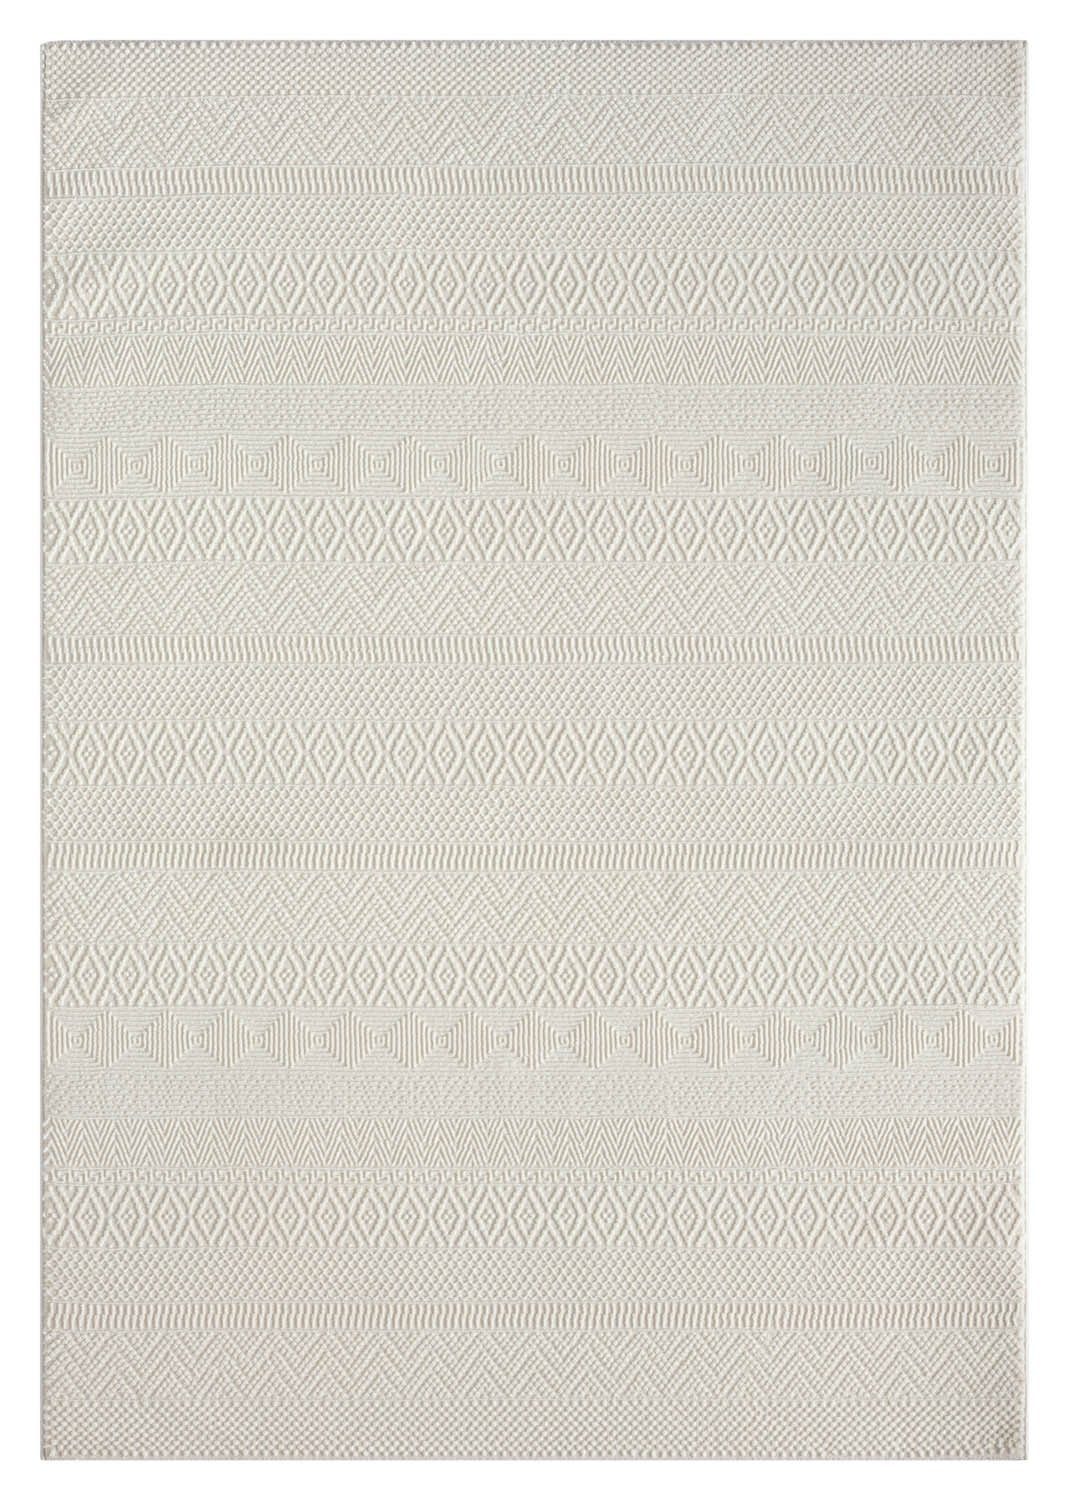 Teppich ARCTIC, Creme, 120 x 170 cm, Polyester, Muster, merinos, rechteckig,  Höhe: 12 mm